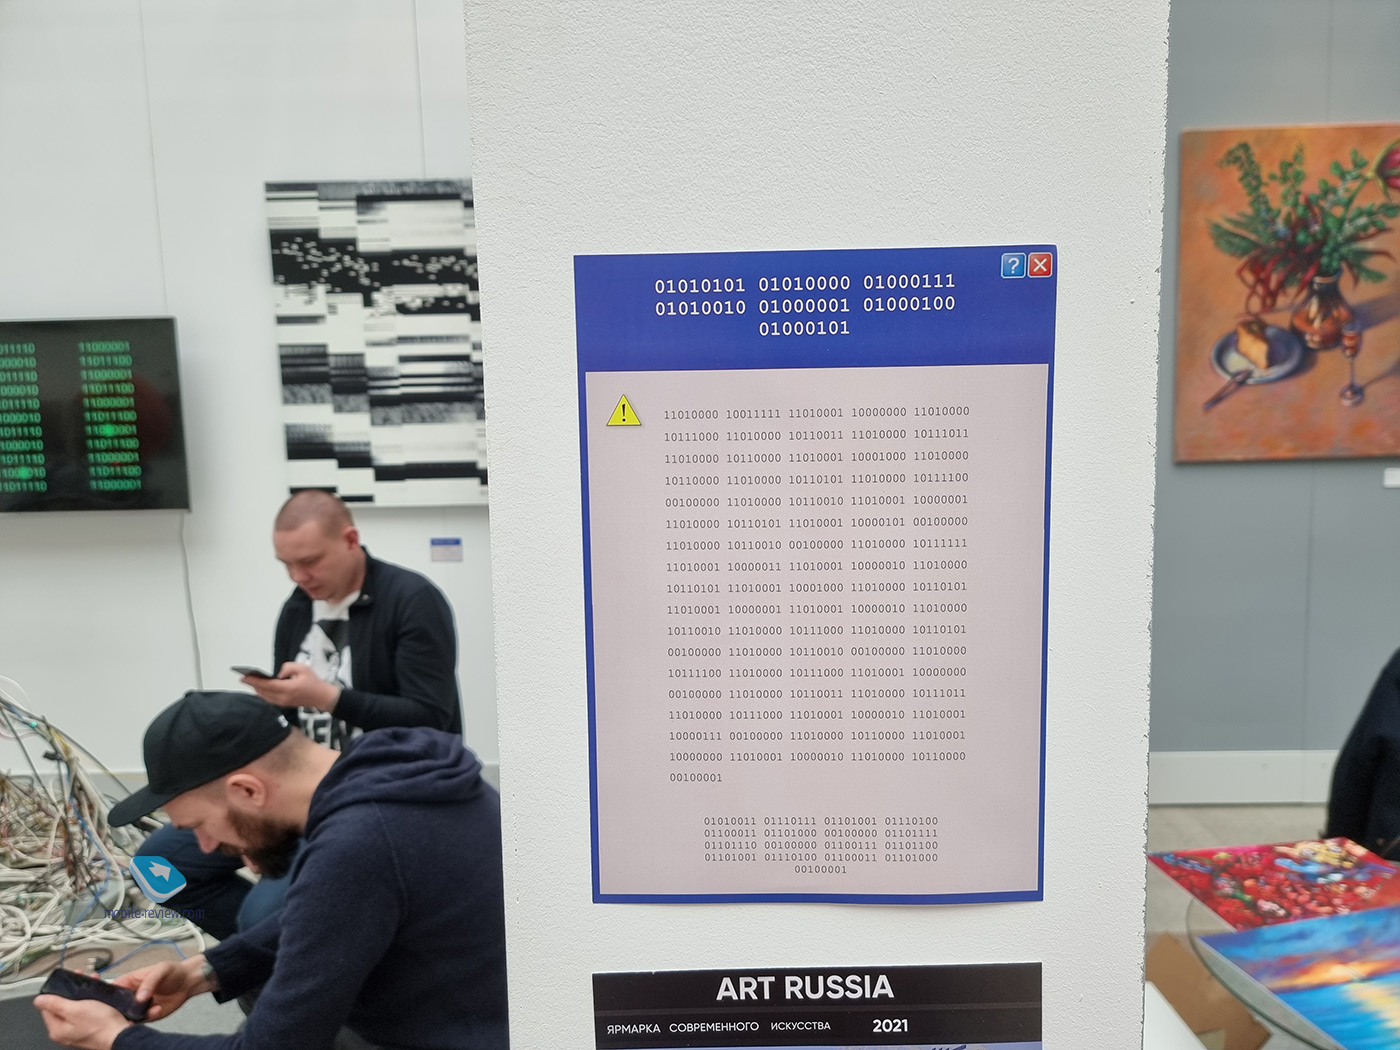    Art Russia 2021.    